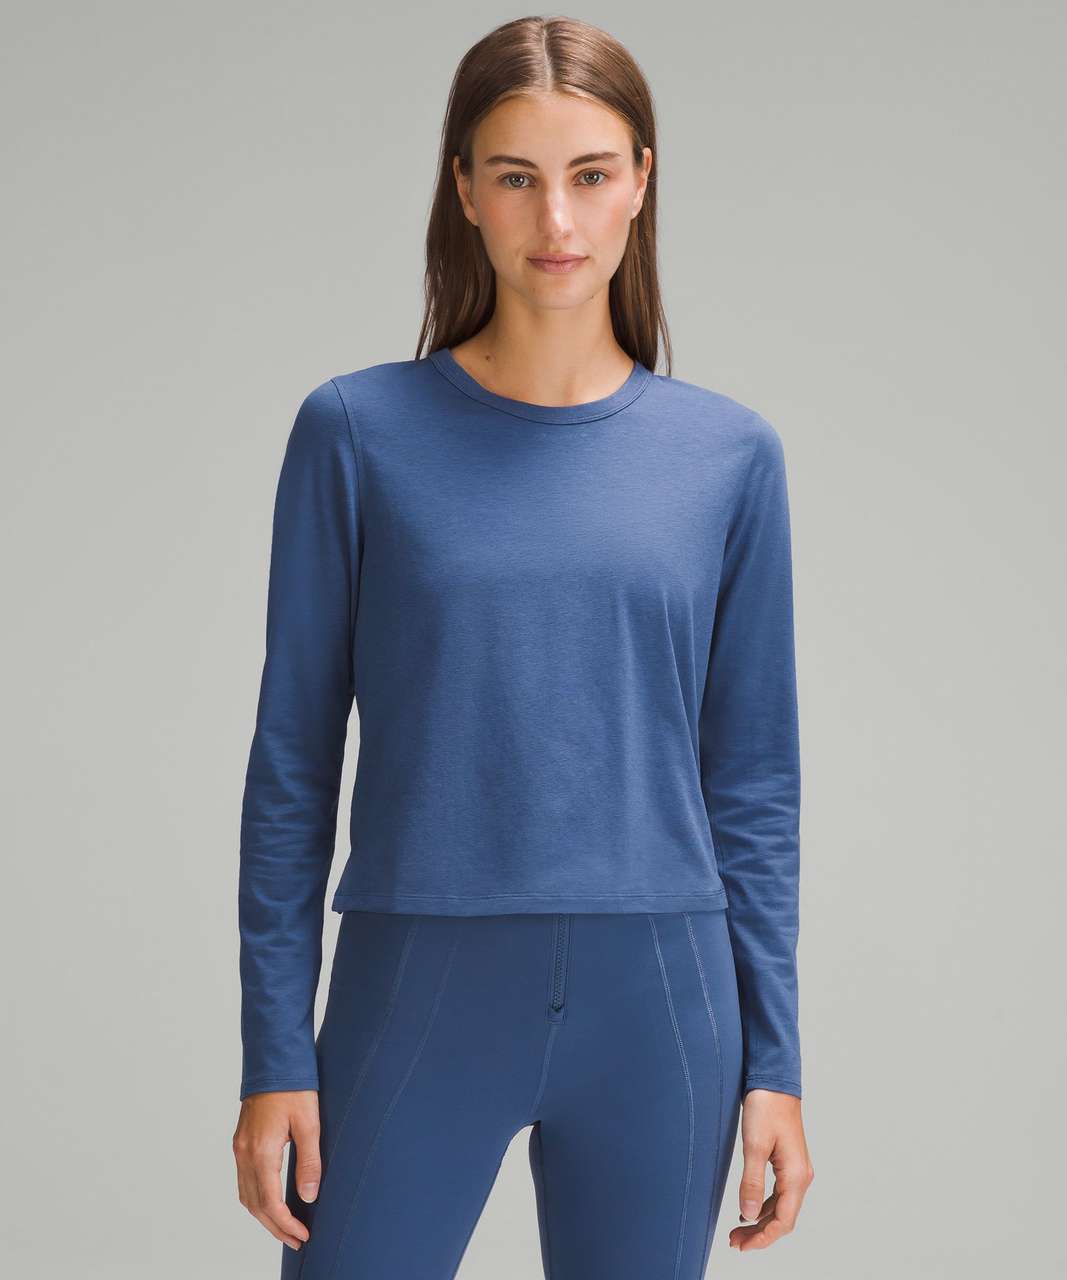 Lululemon Classic-Fit Cotton-Blend Long-Sleeve Shirt - Pitch Blue